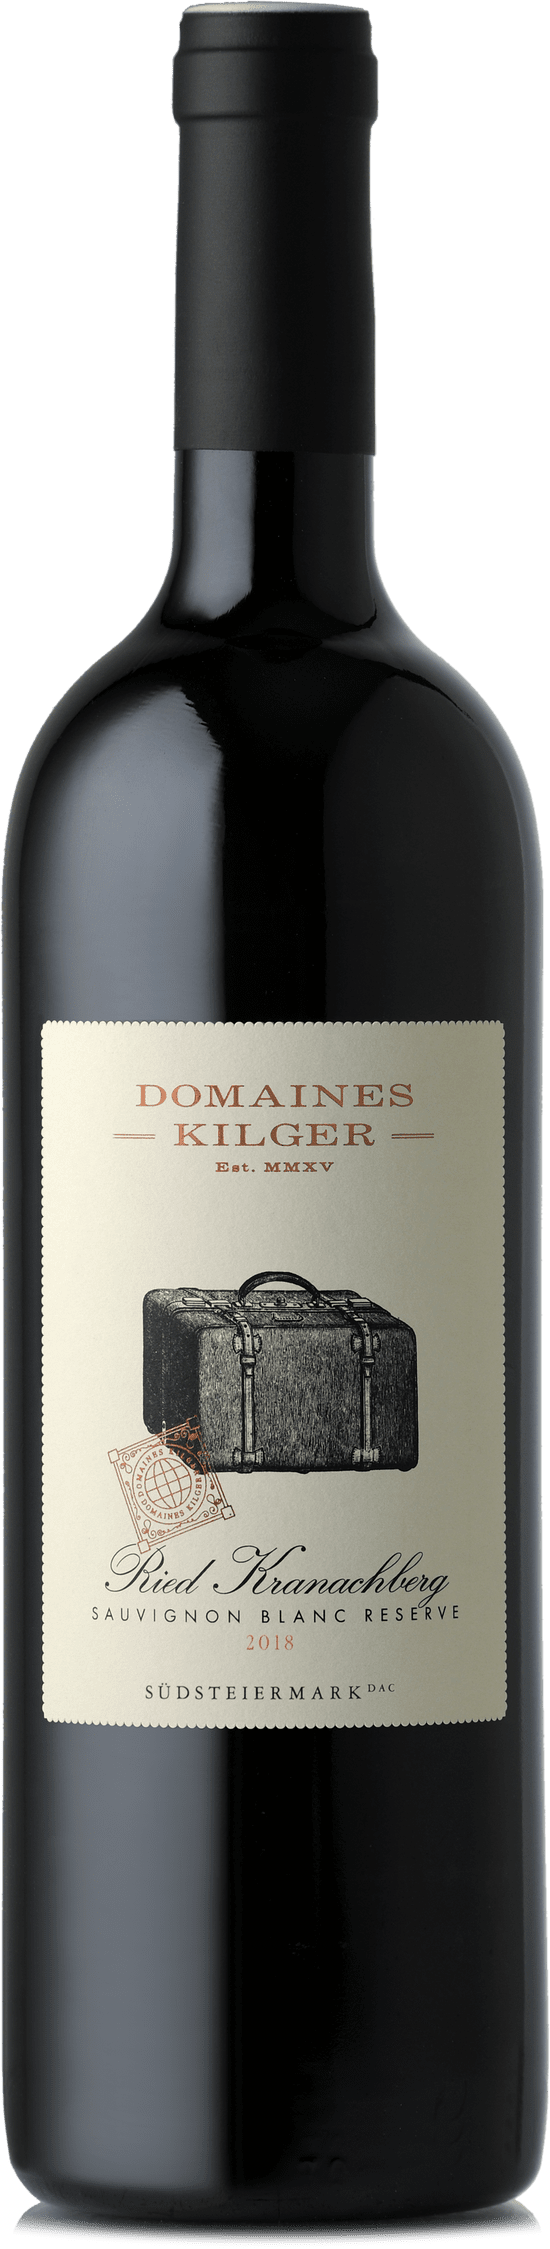 2018 Magnum Chardonnay Ried KRANACHBERG Reserve DAC